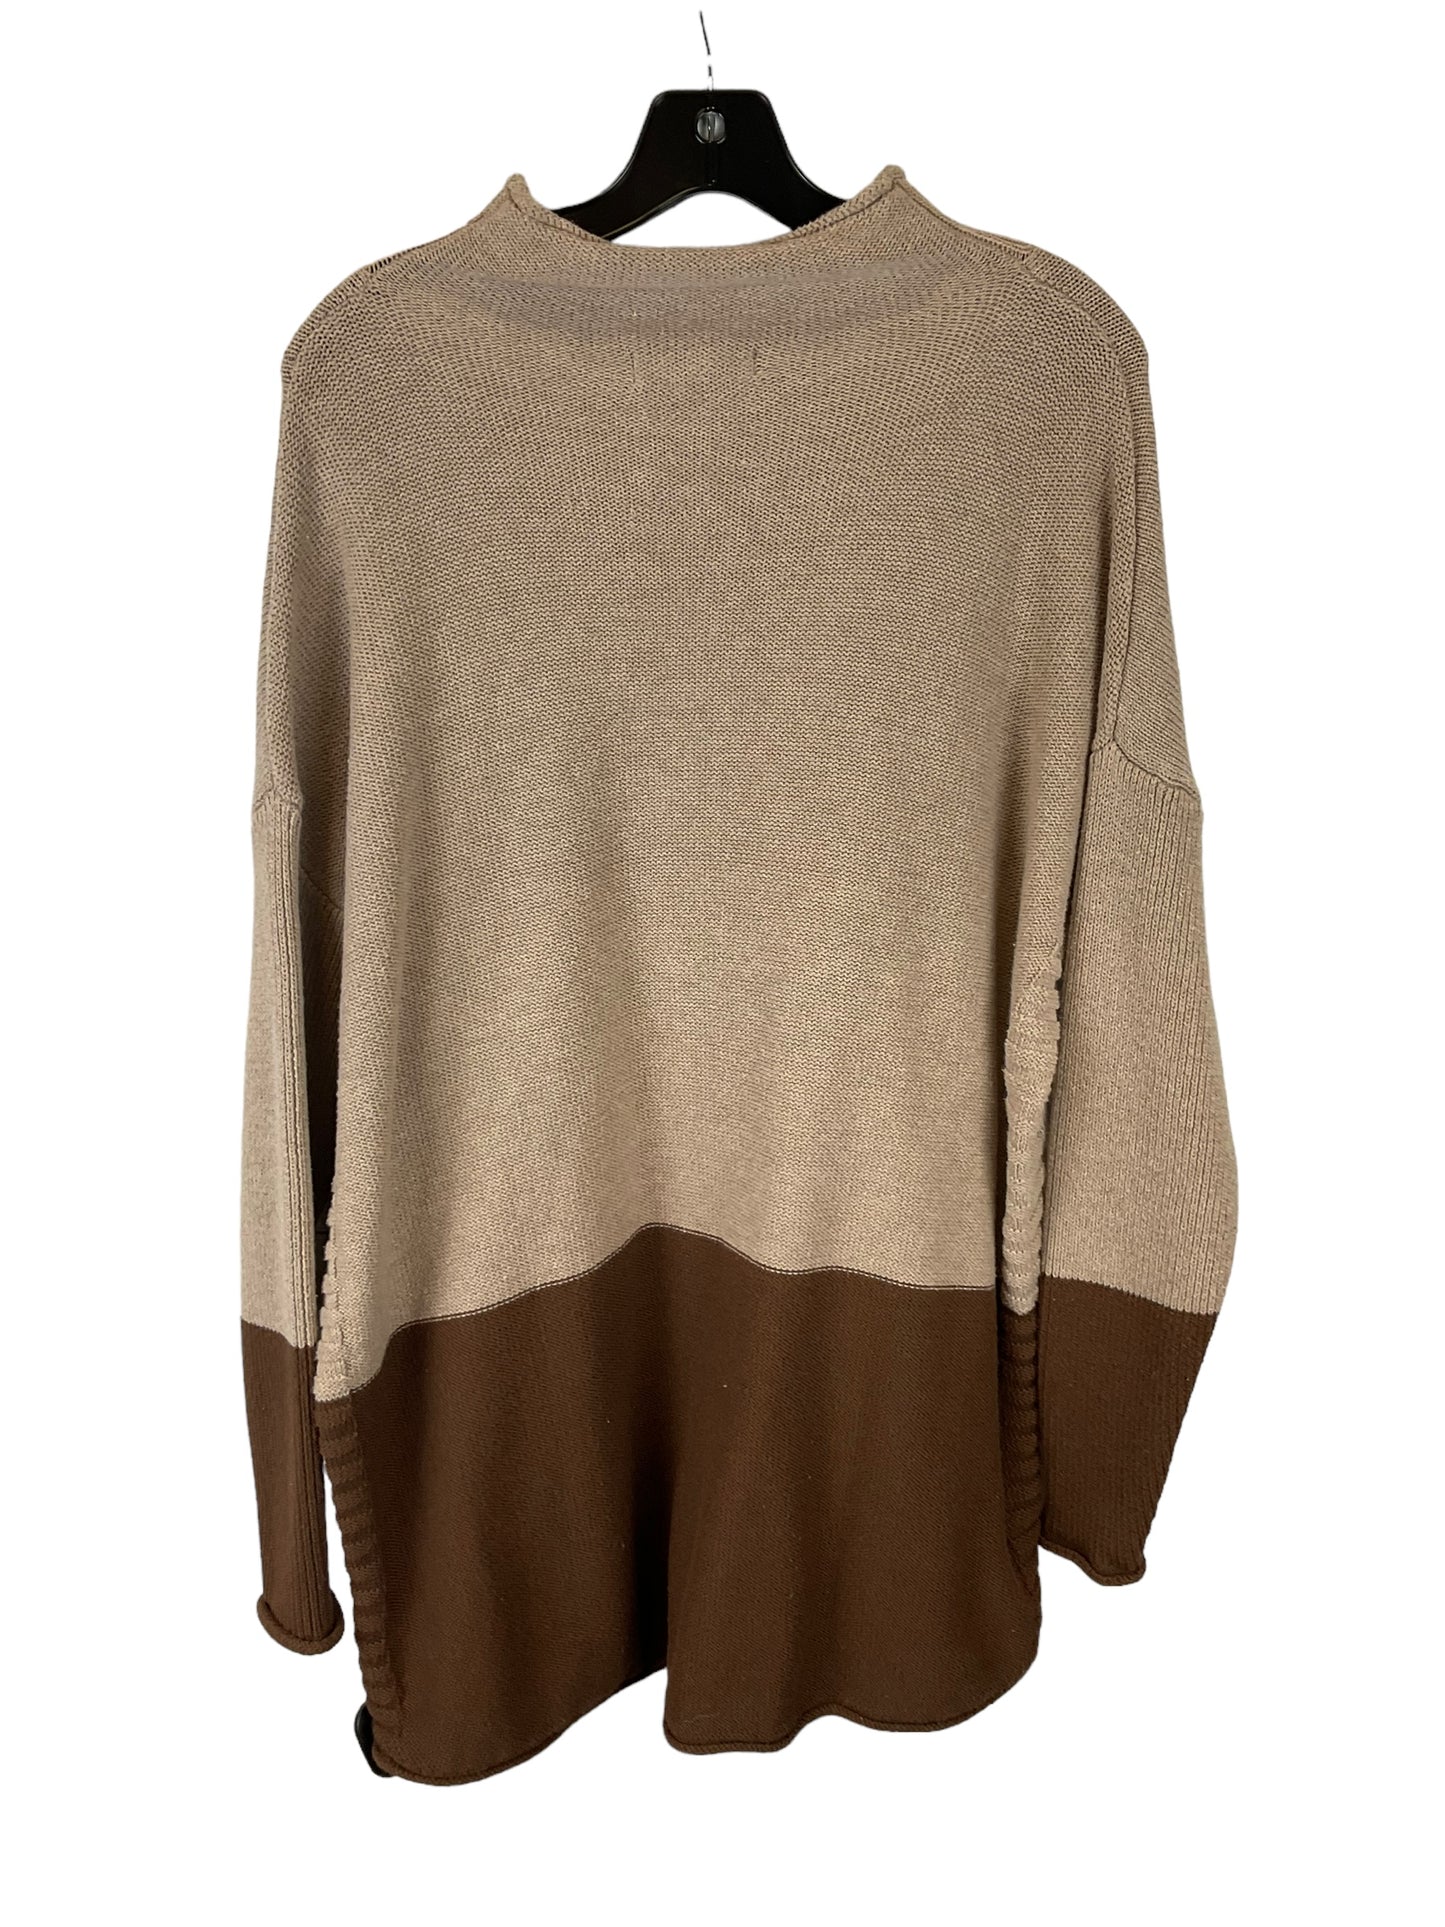 Sweater By Tahari  Size: 1x